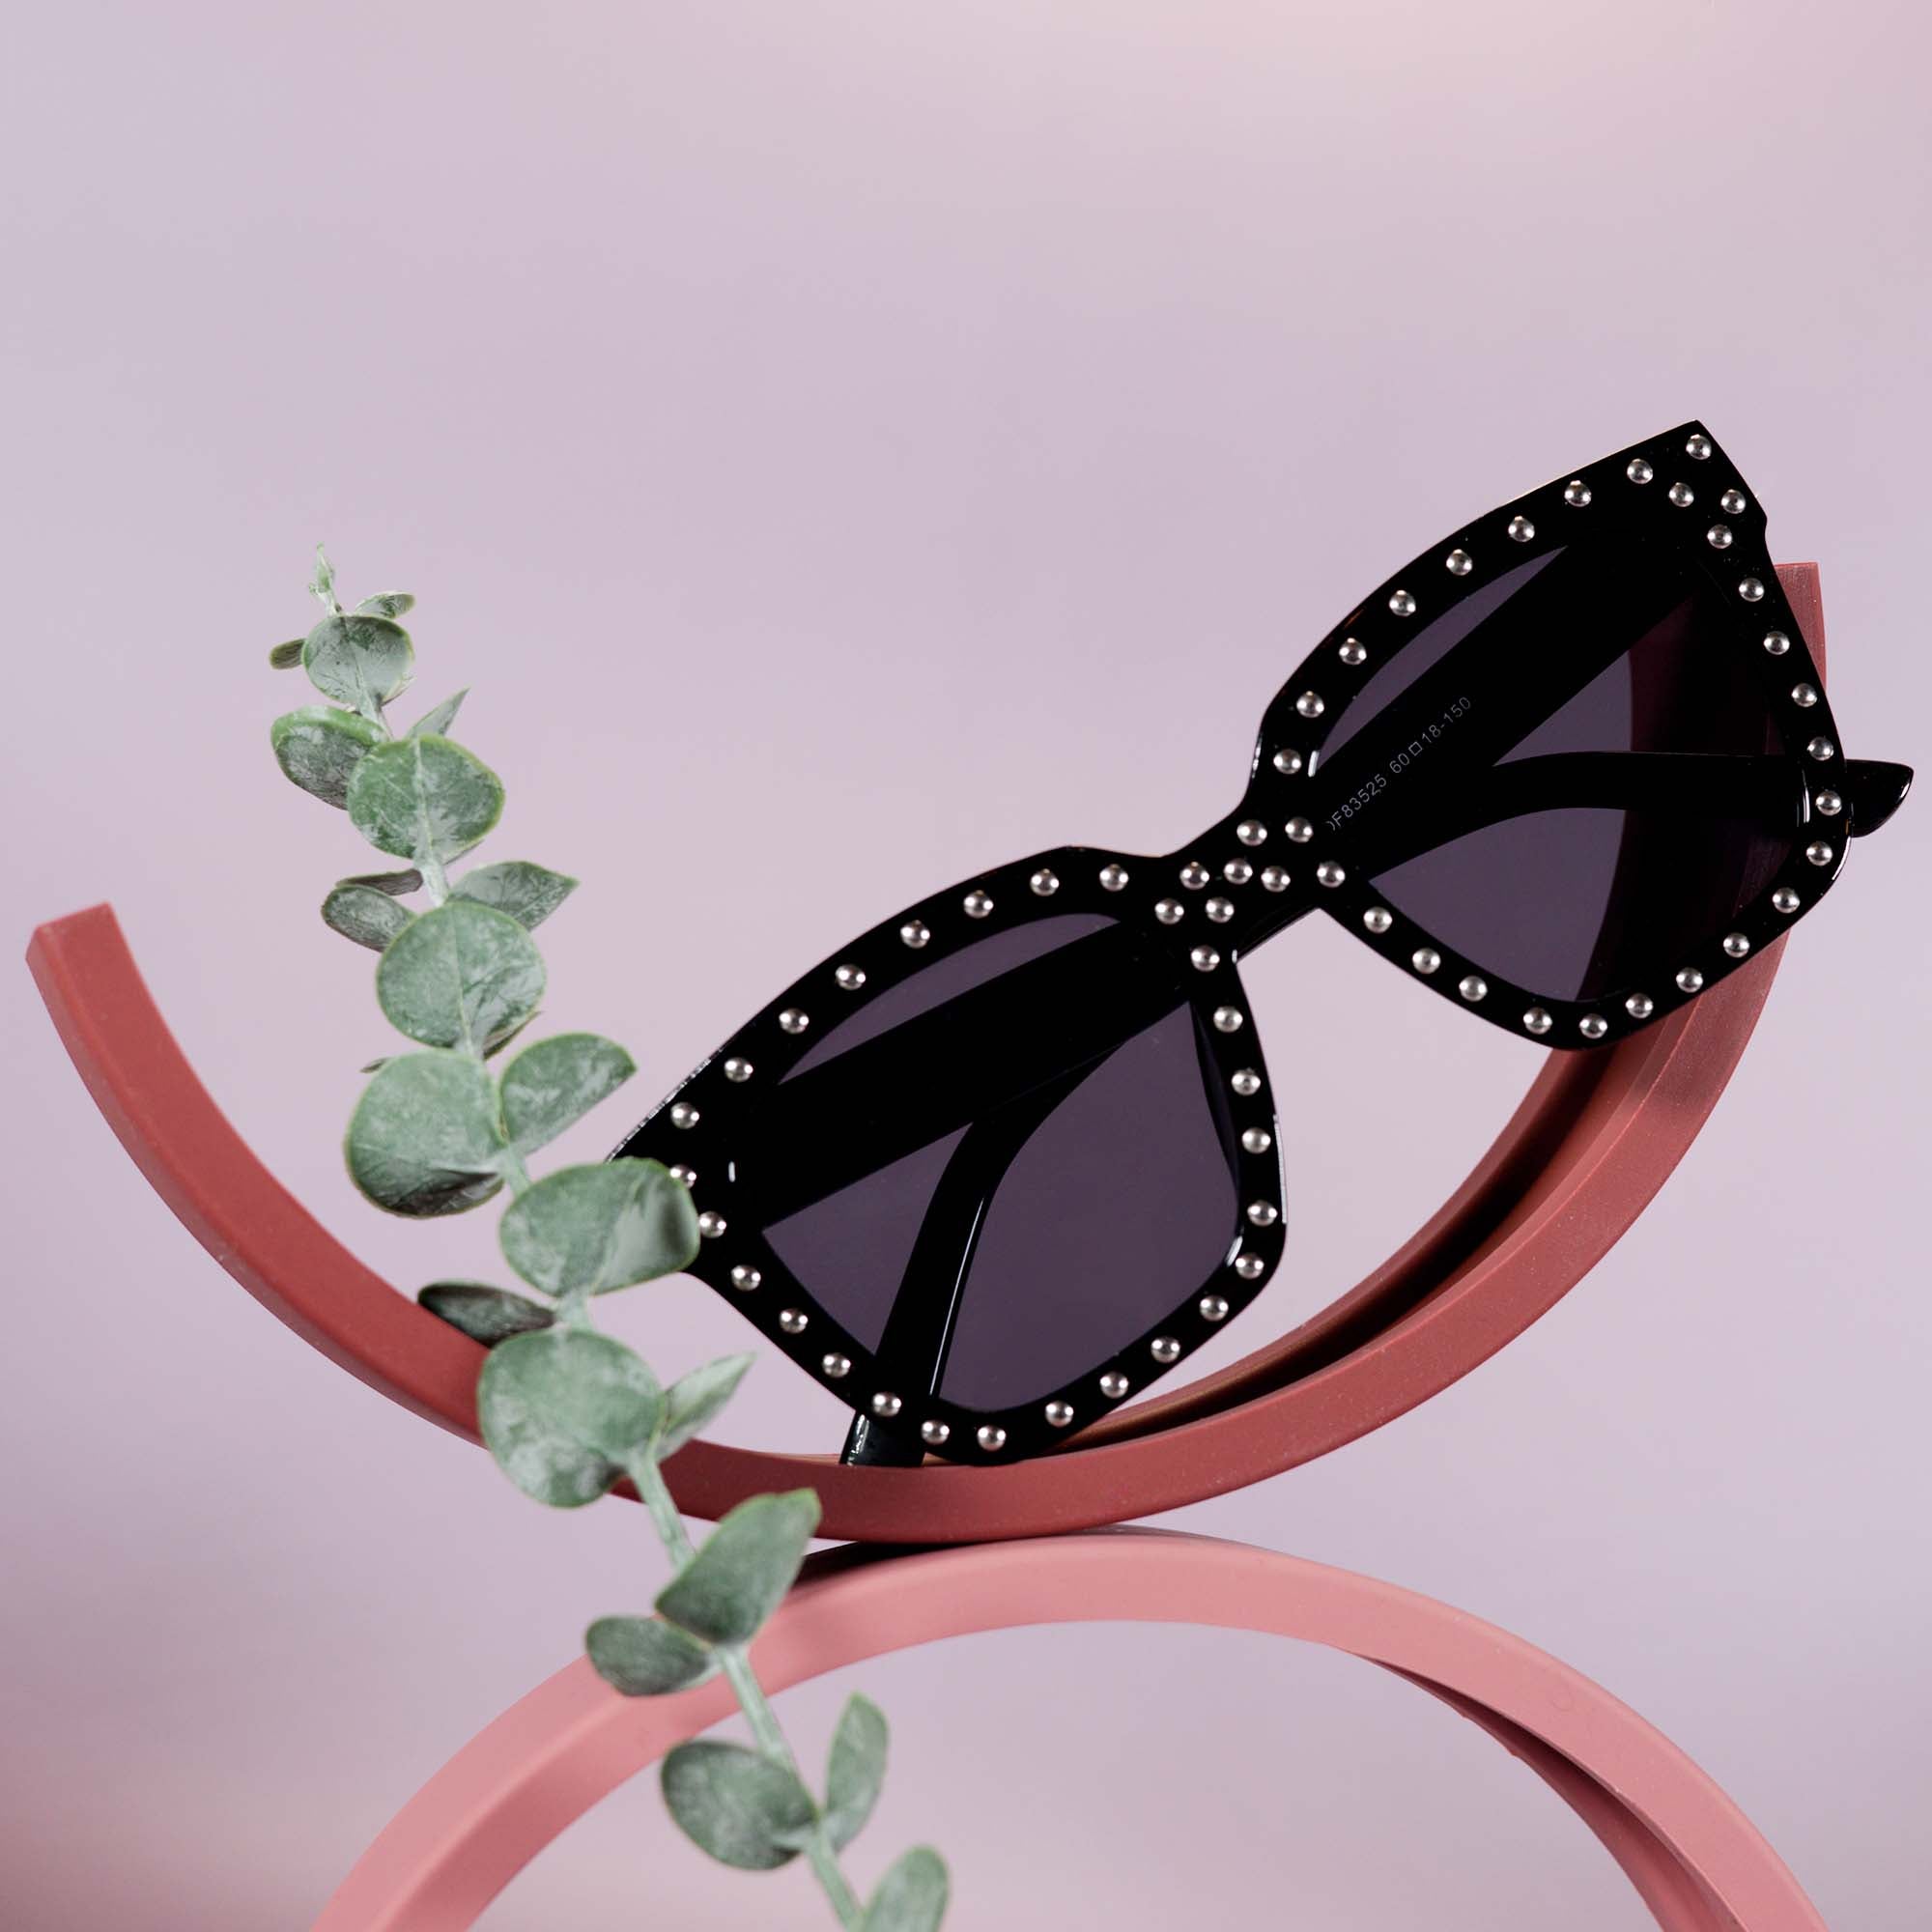 Black Studded Square Frame Sunglasses